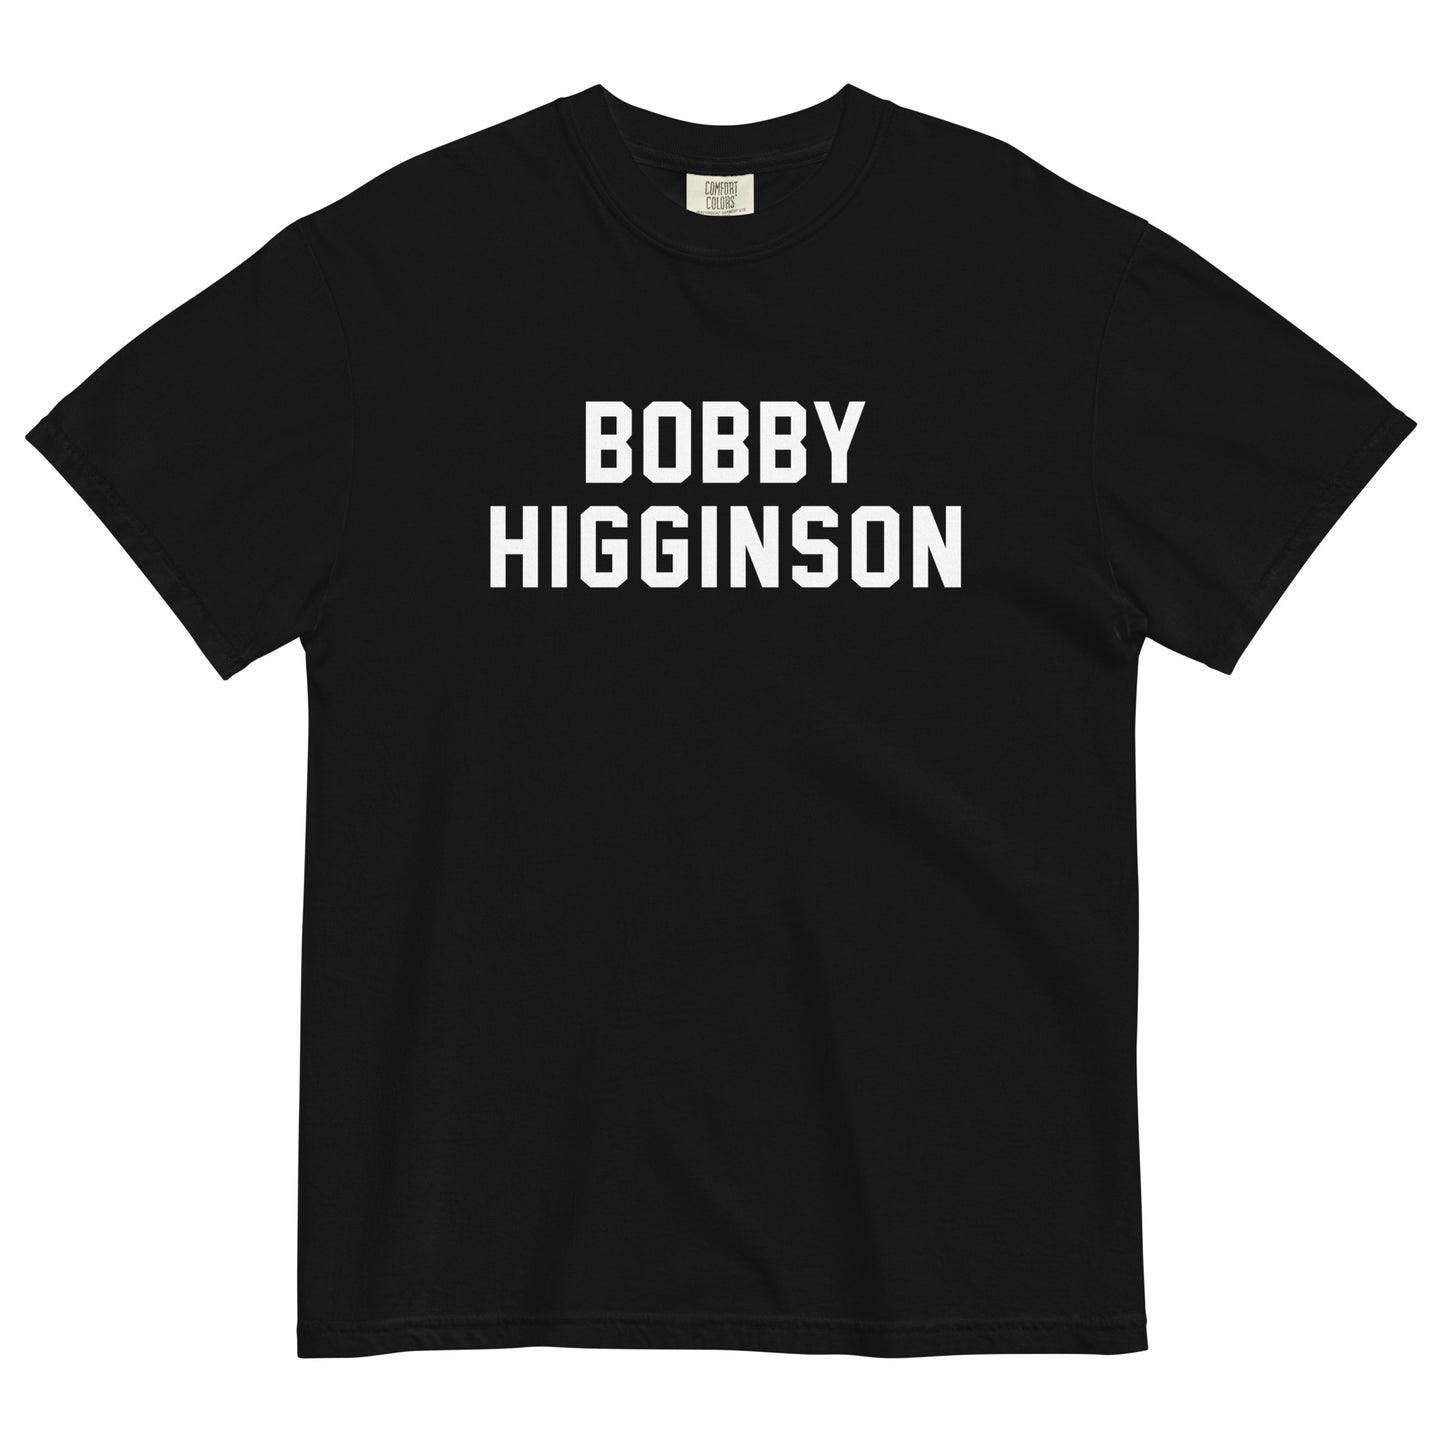 BOBBY HIGGINSON